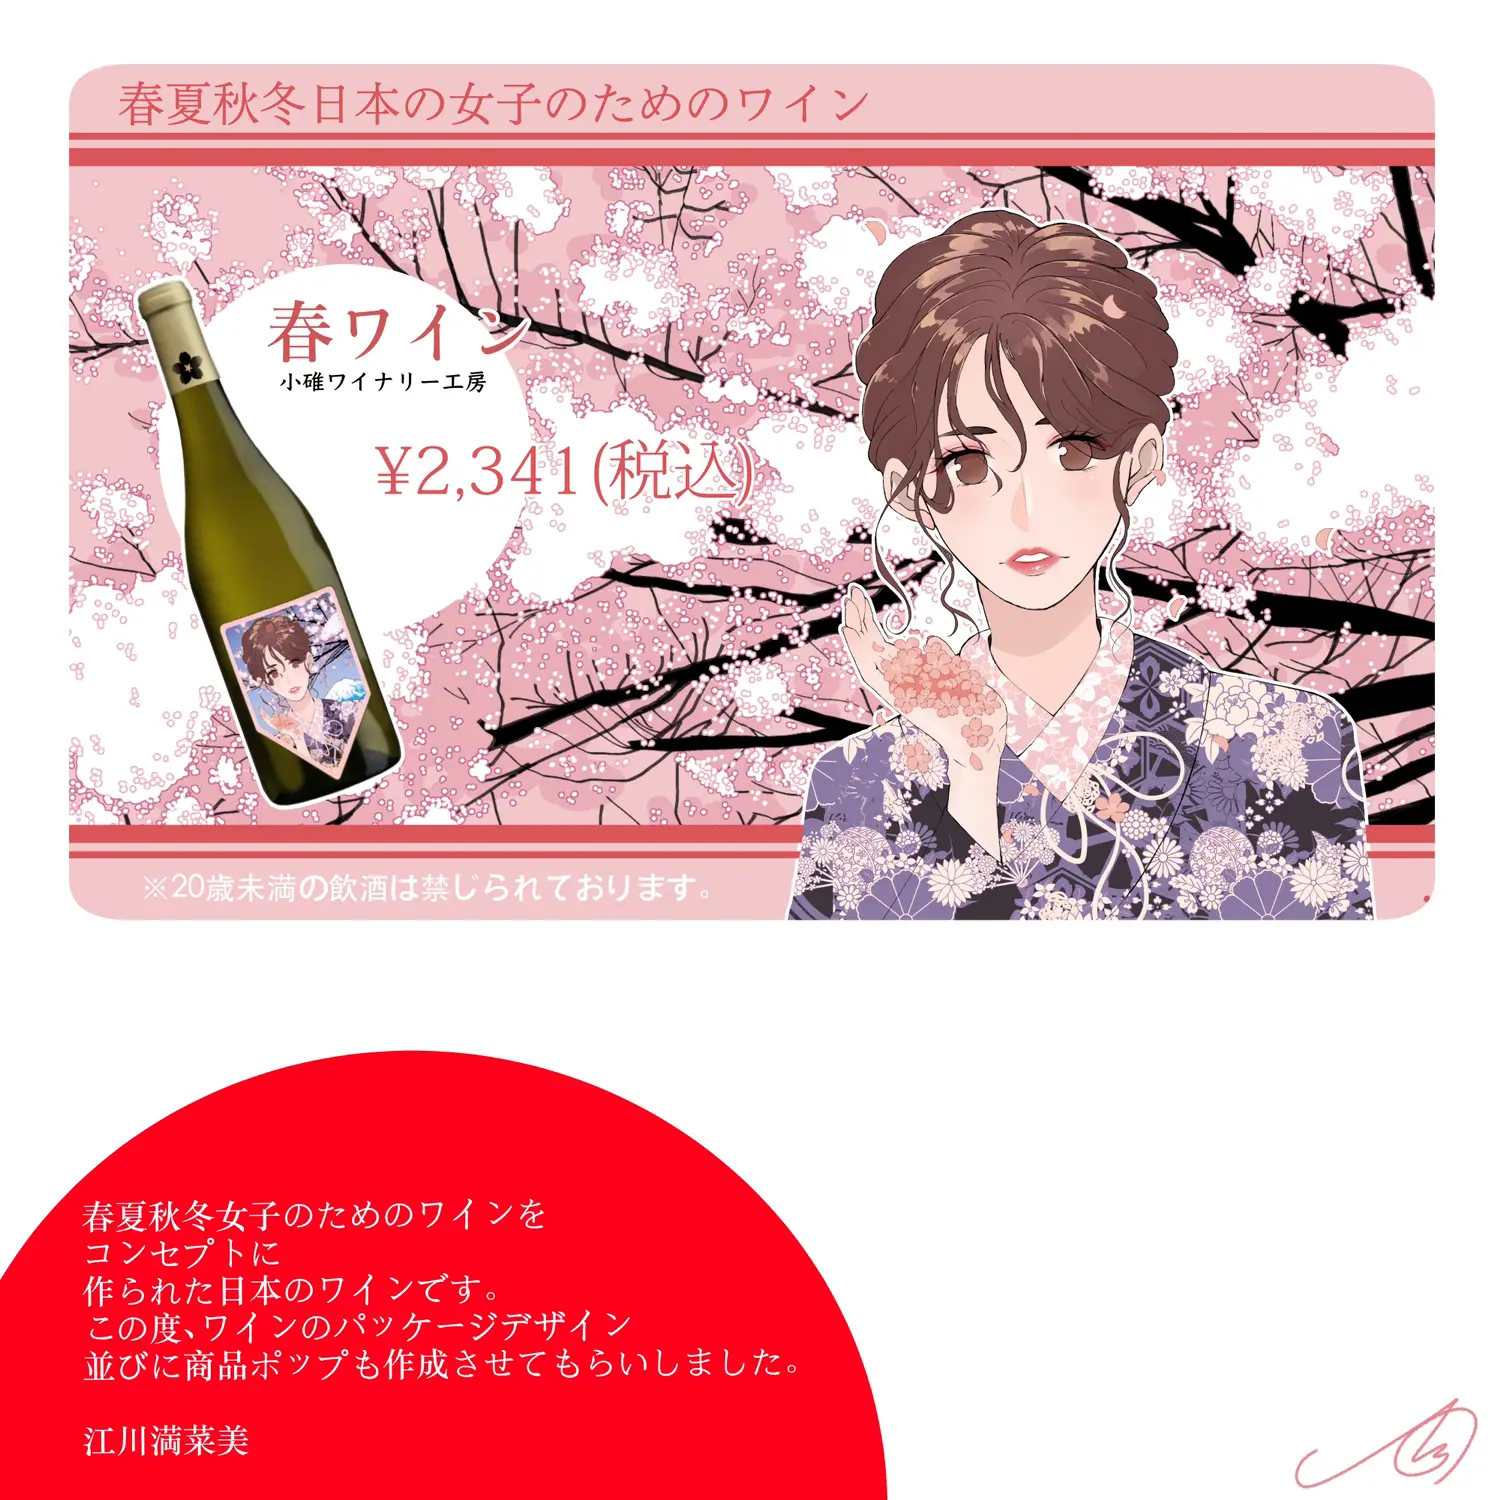 Pr 春夏秋冬日本の女子のためのワインデザインしました ポップデザイン 江川満菜美が投稿したフォトブック Lemon8